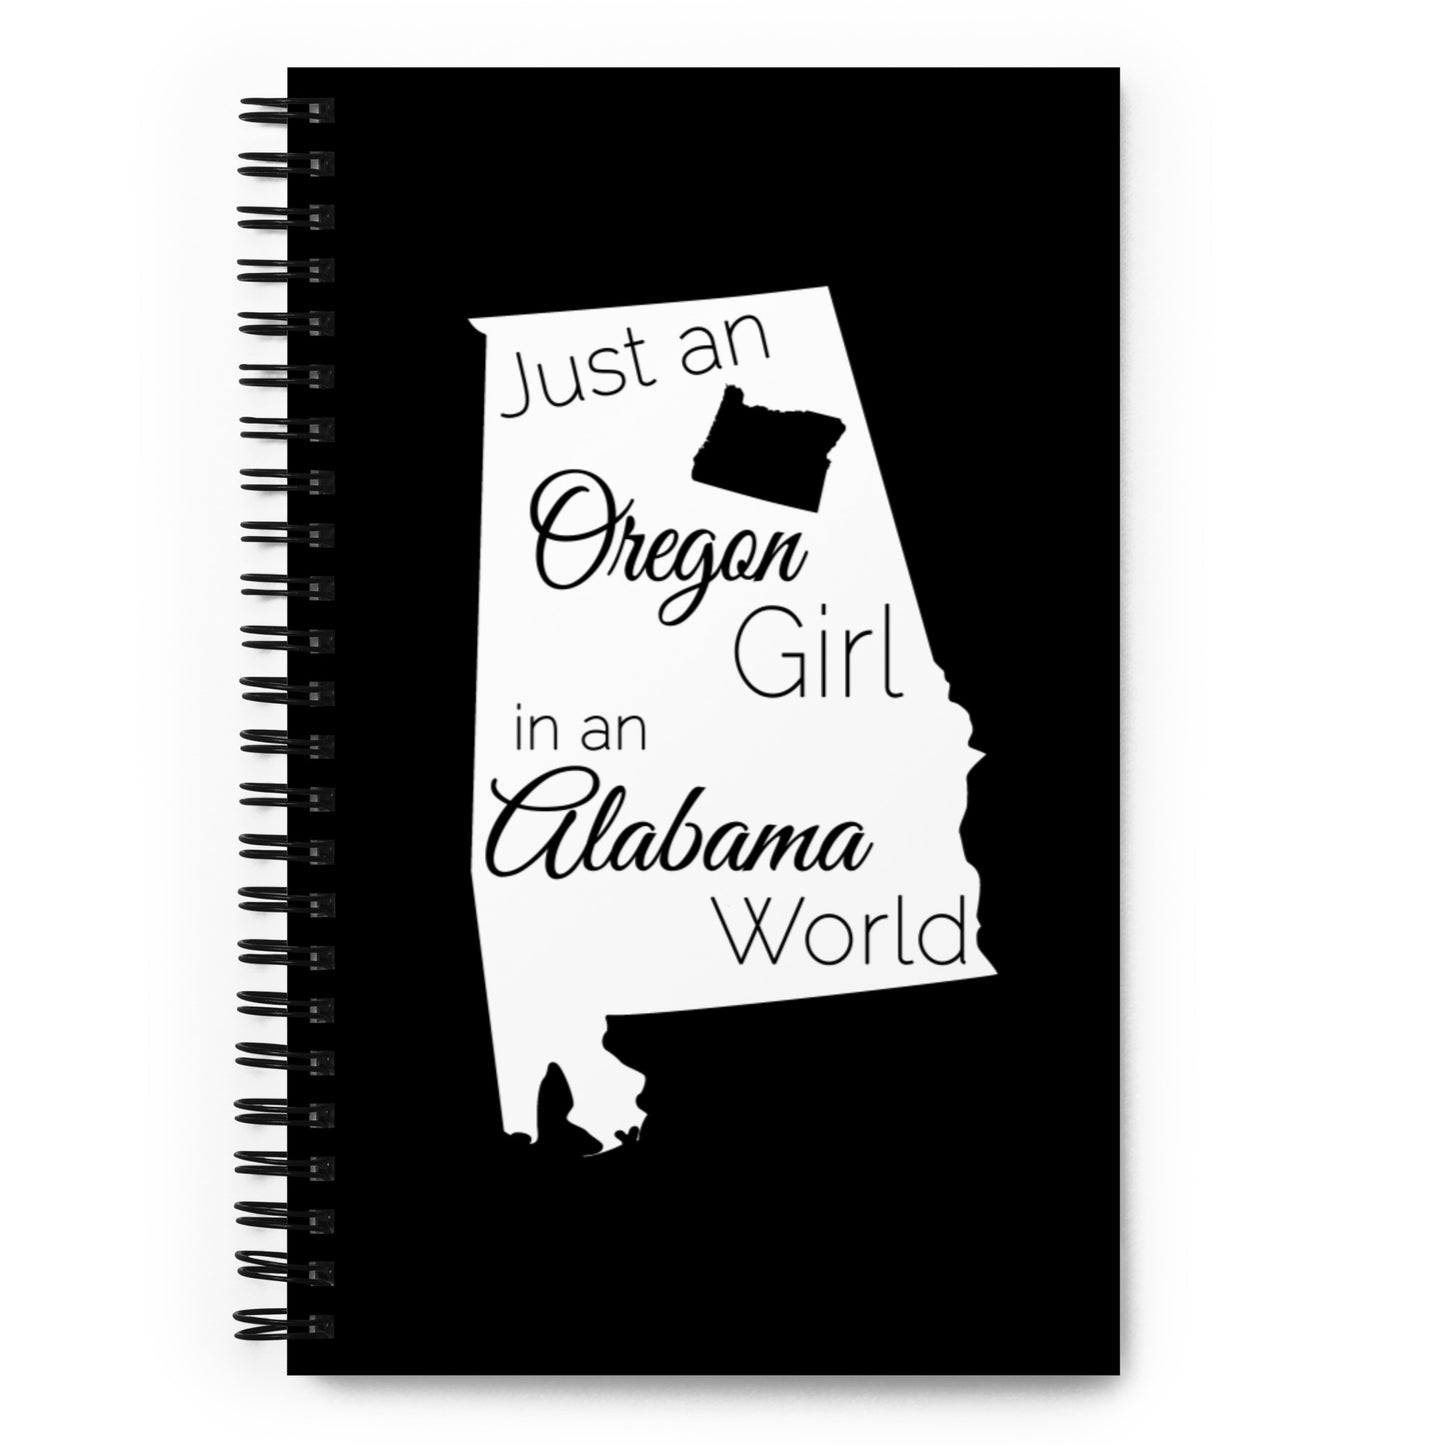 Just an Oregon Girl in an Alabama World Spiral notebook